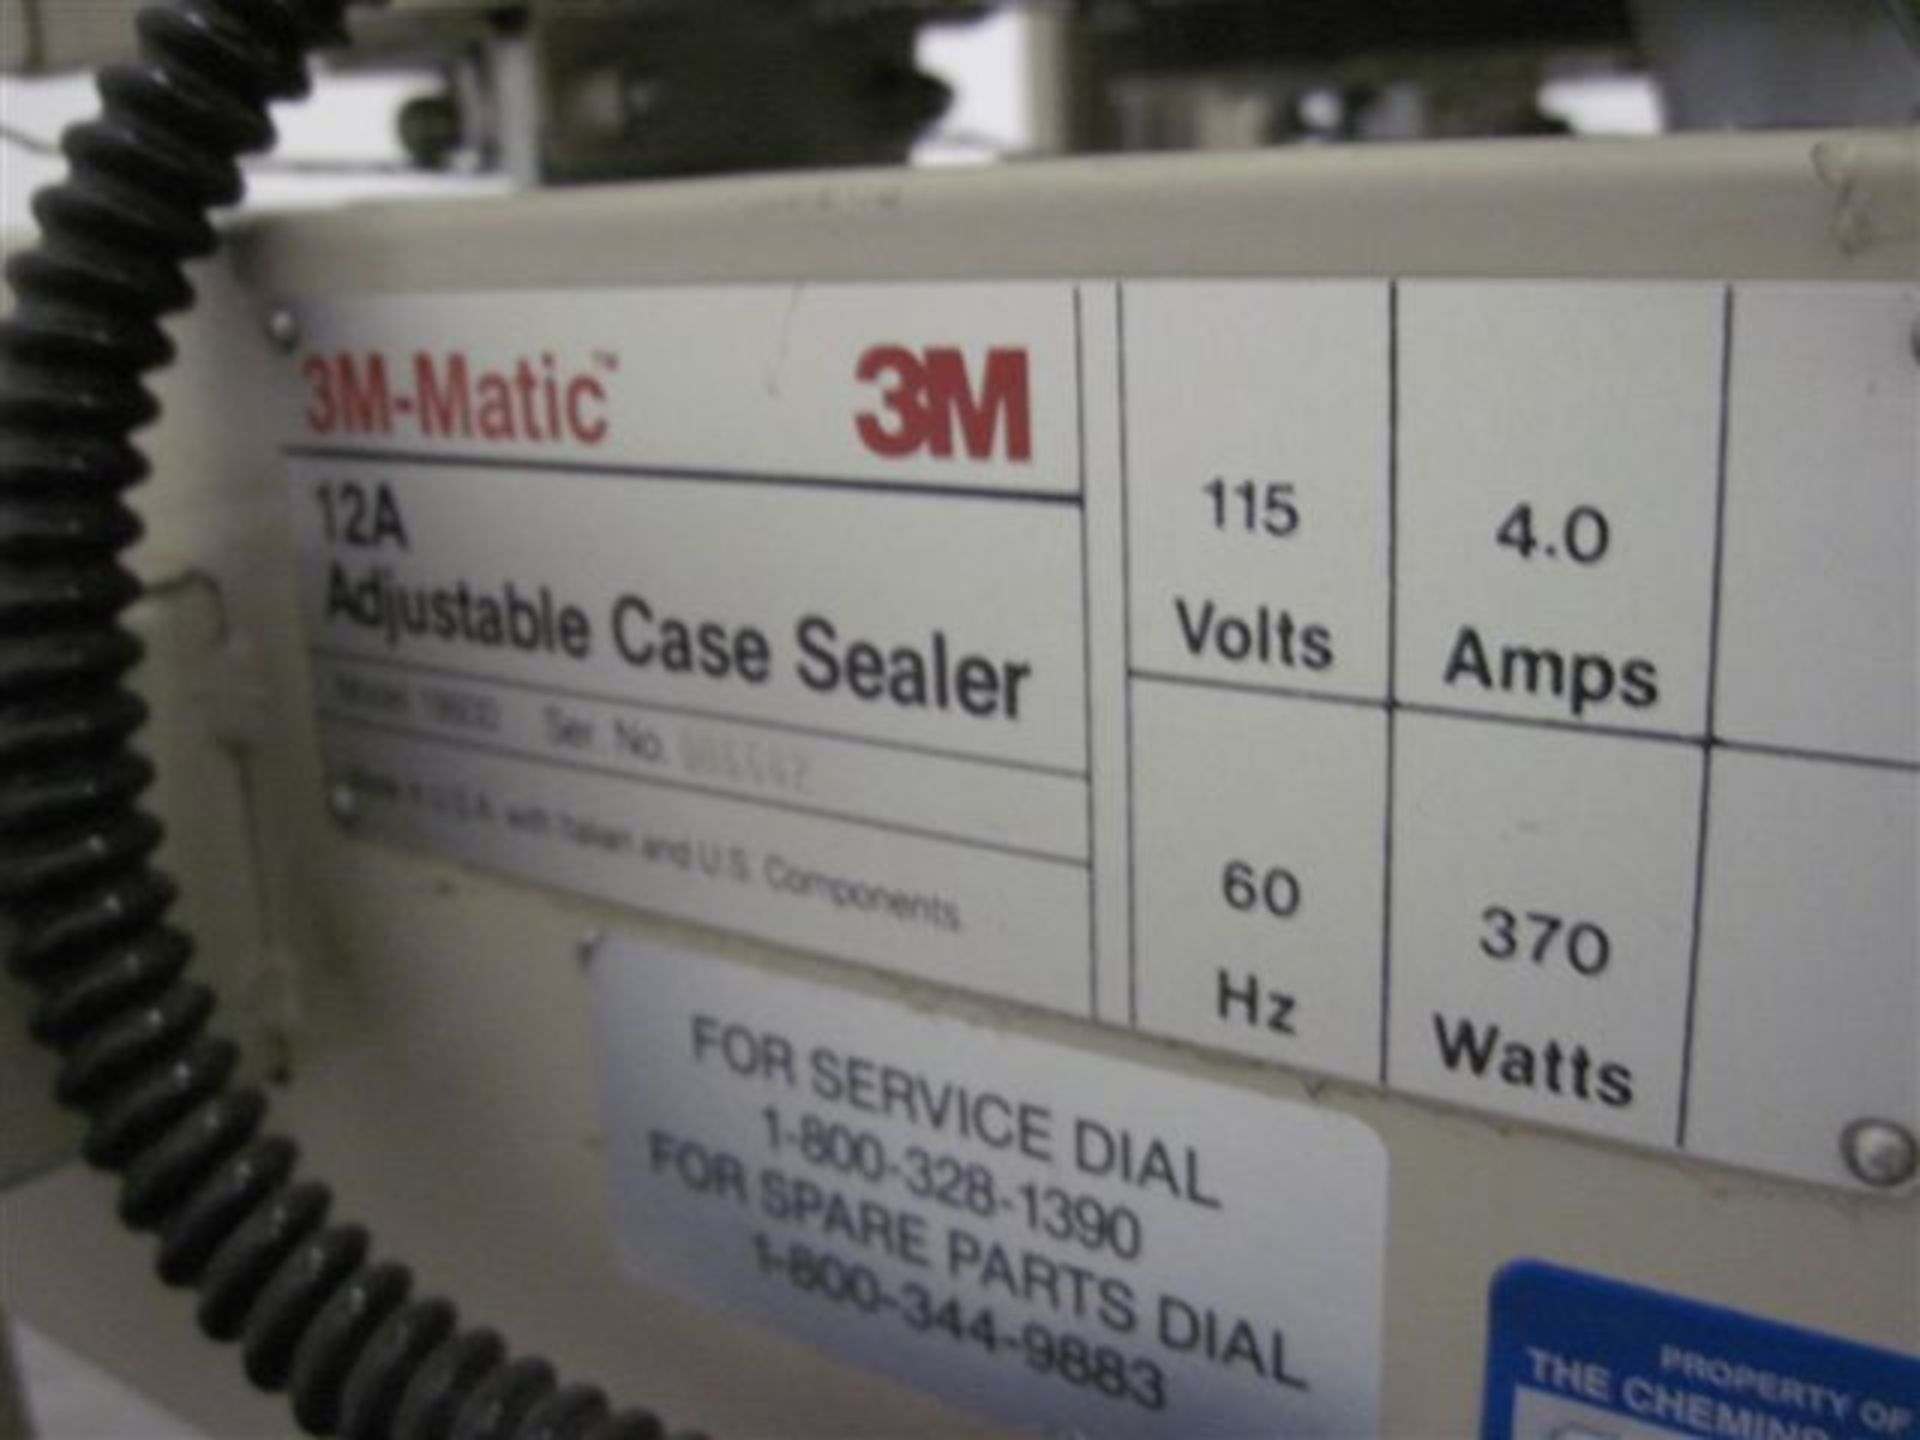 3M-Matic 12A Adjustable Case Sealer - Image 5 of 6